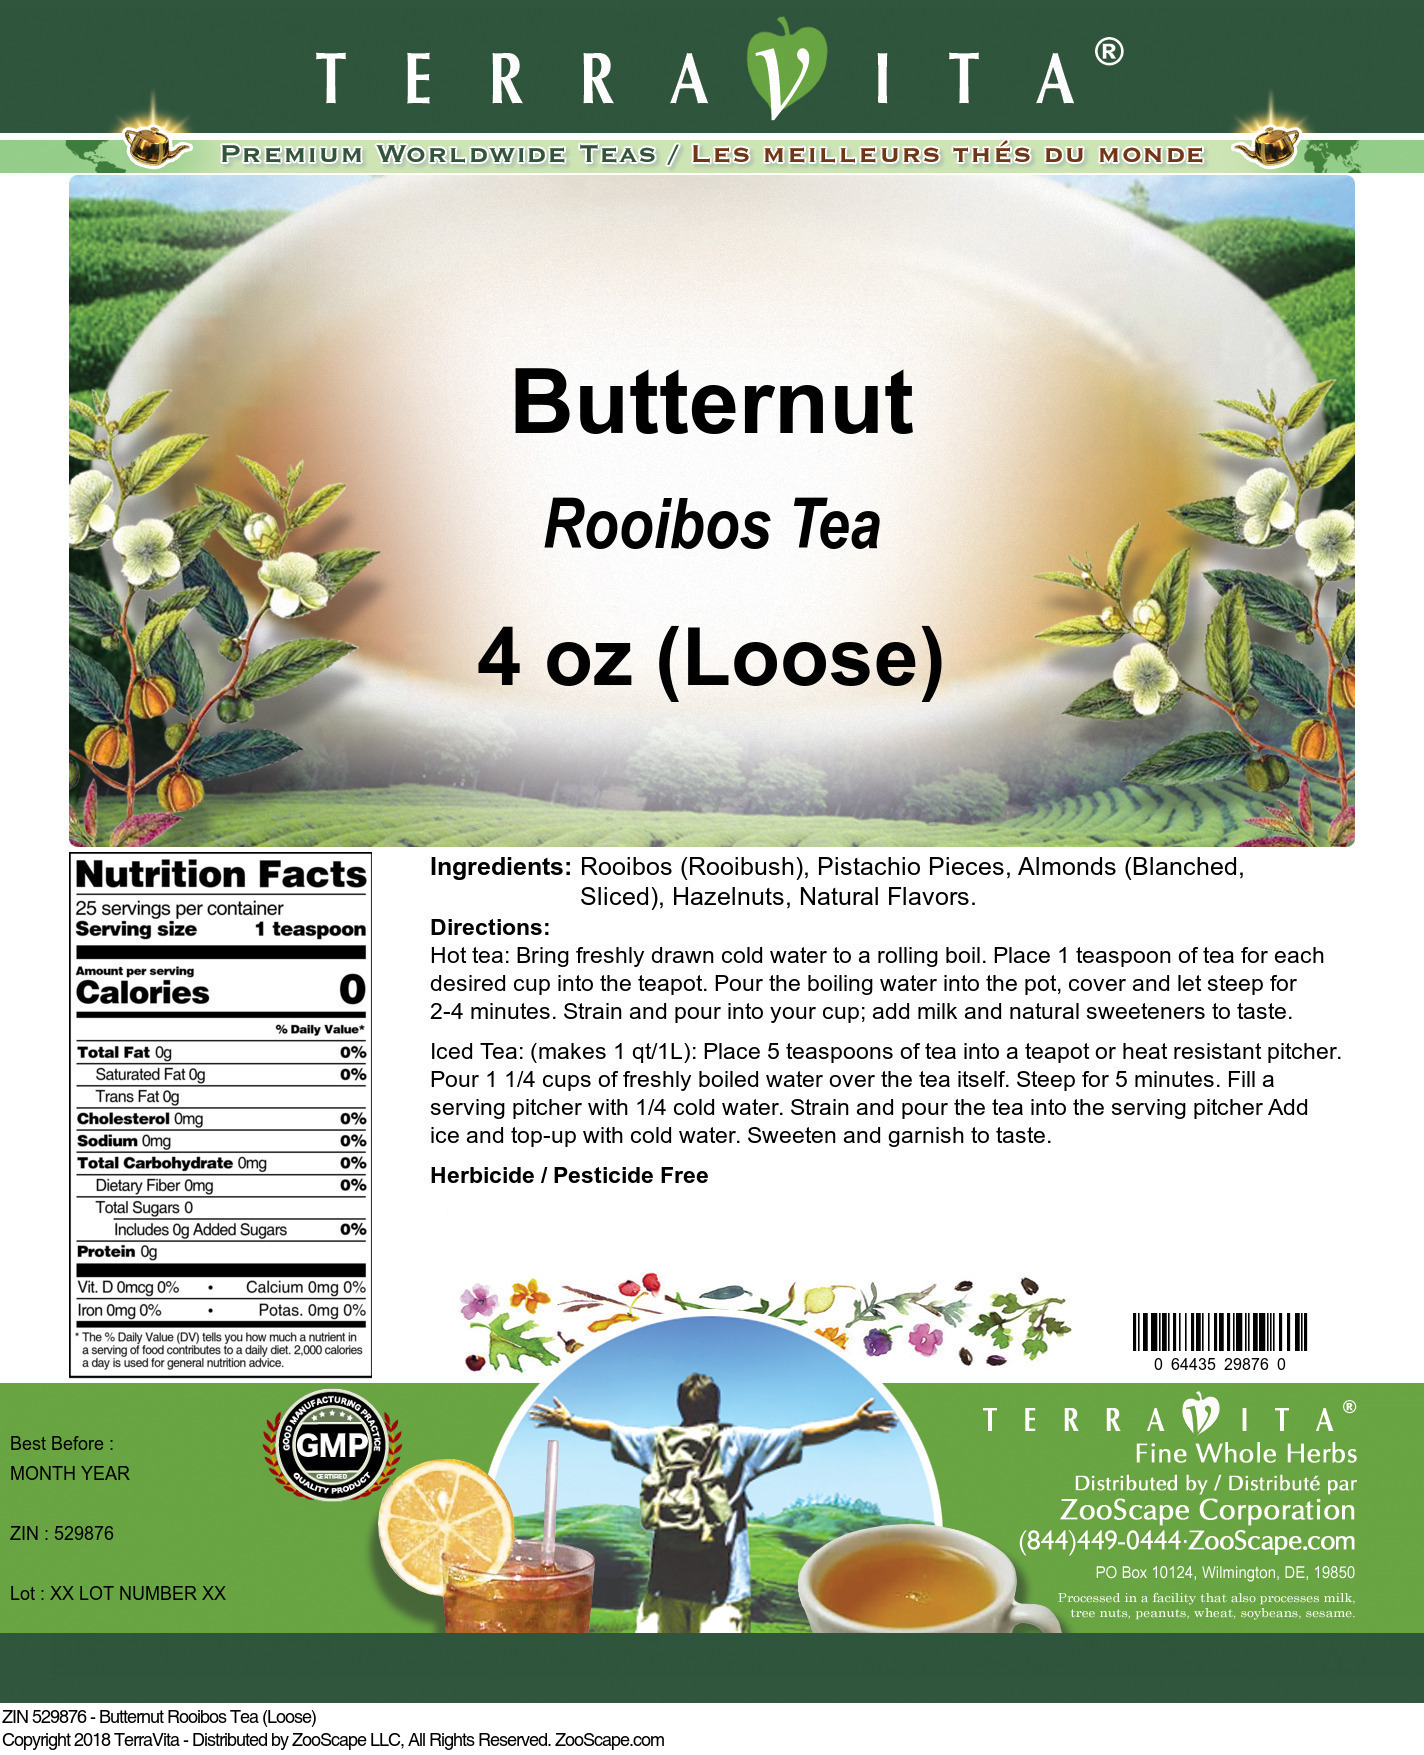 Butternut Rooibos Tea (Loose) - Label